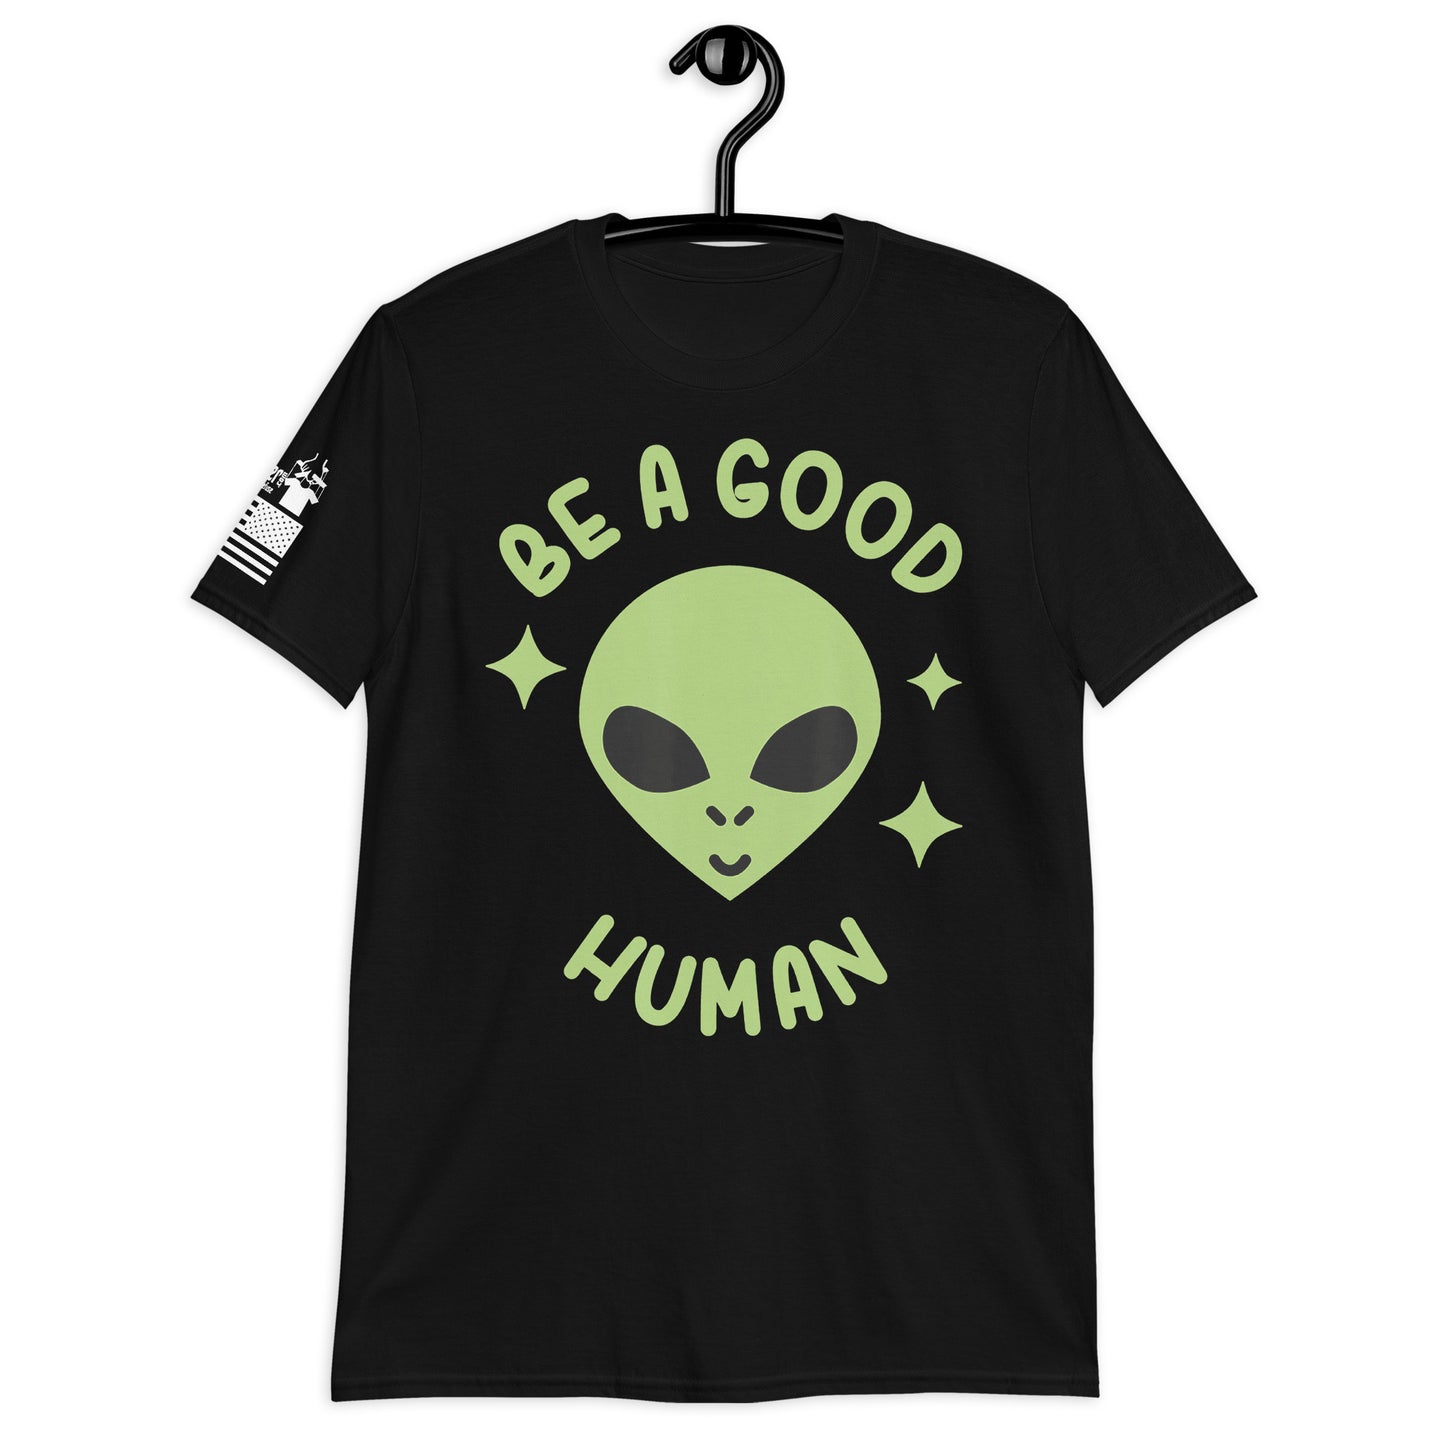 Be a good Human - Basic T-Shirt (unisex) | TheShirtfather